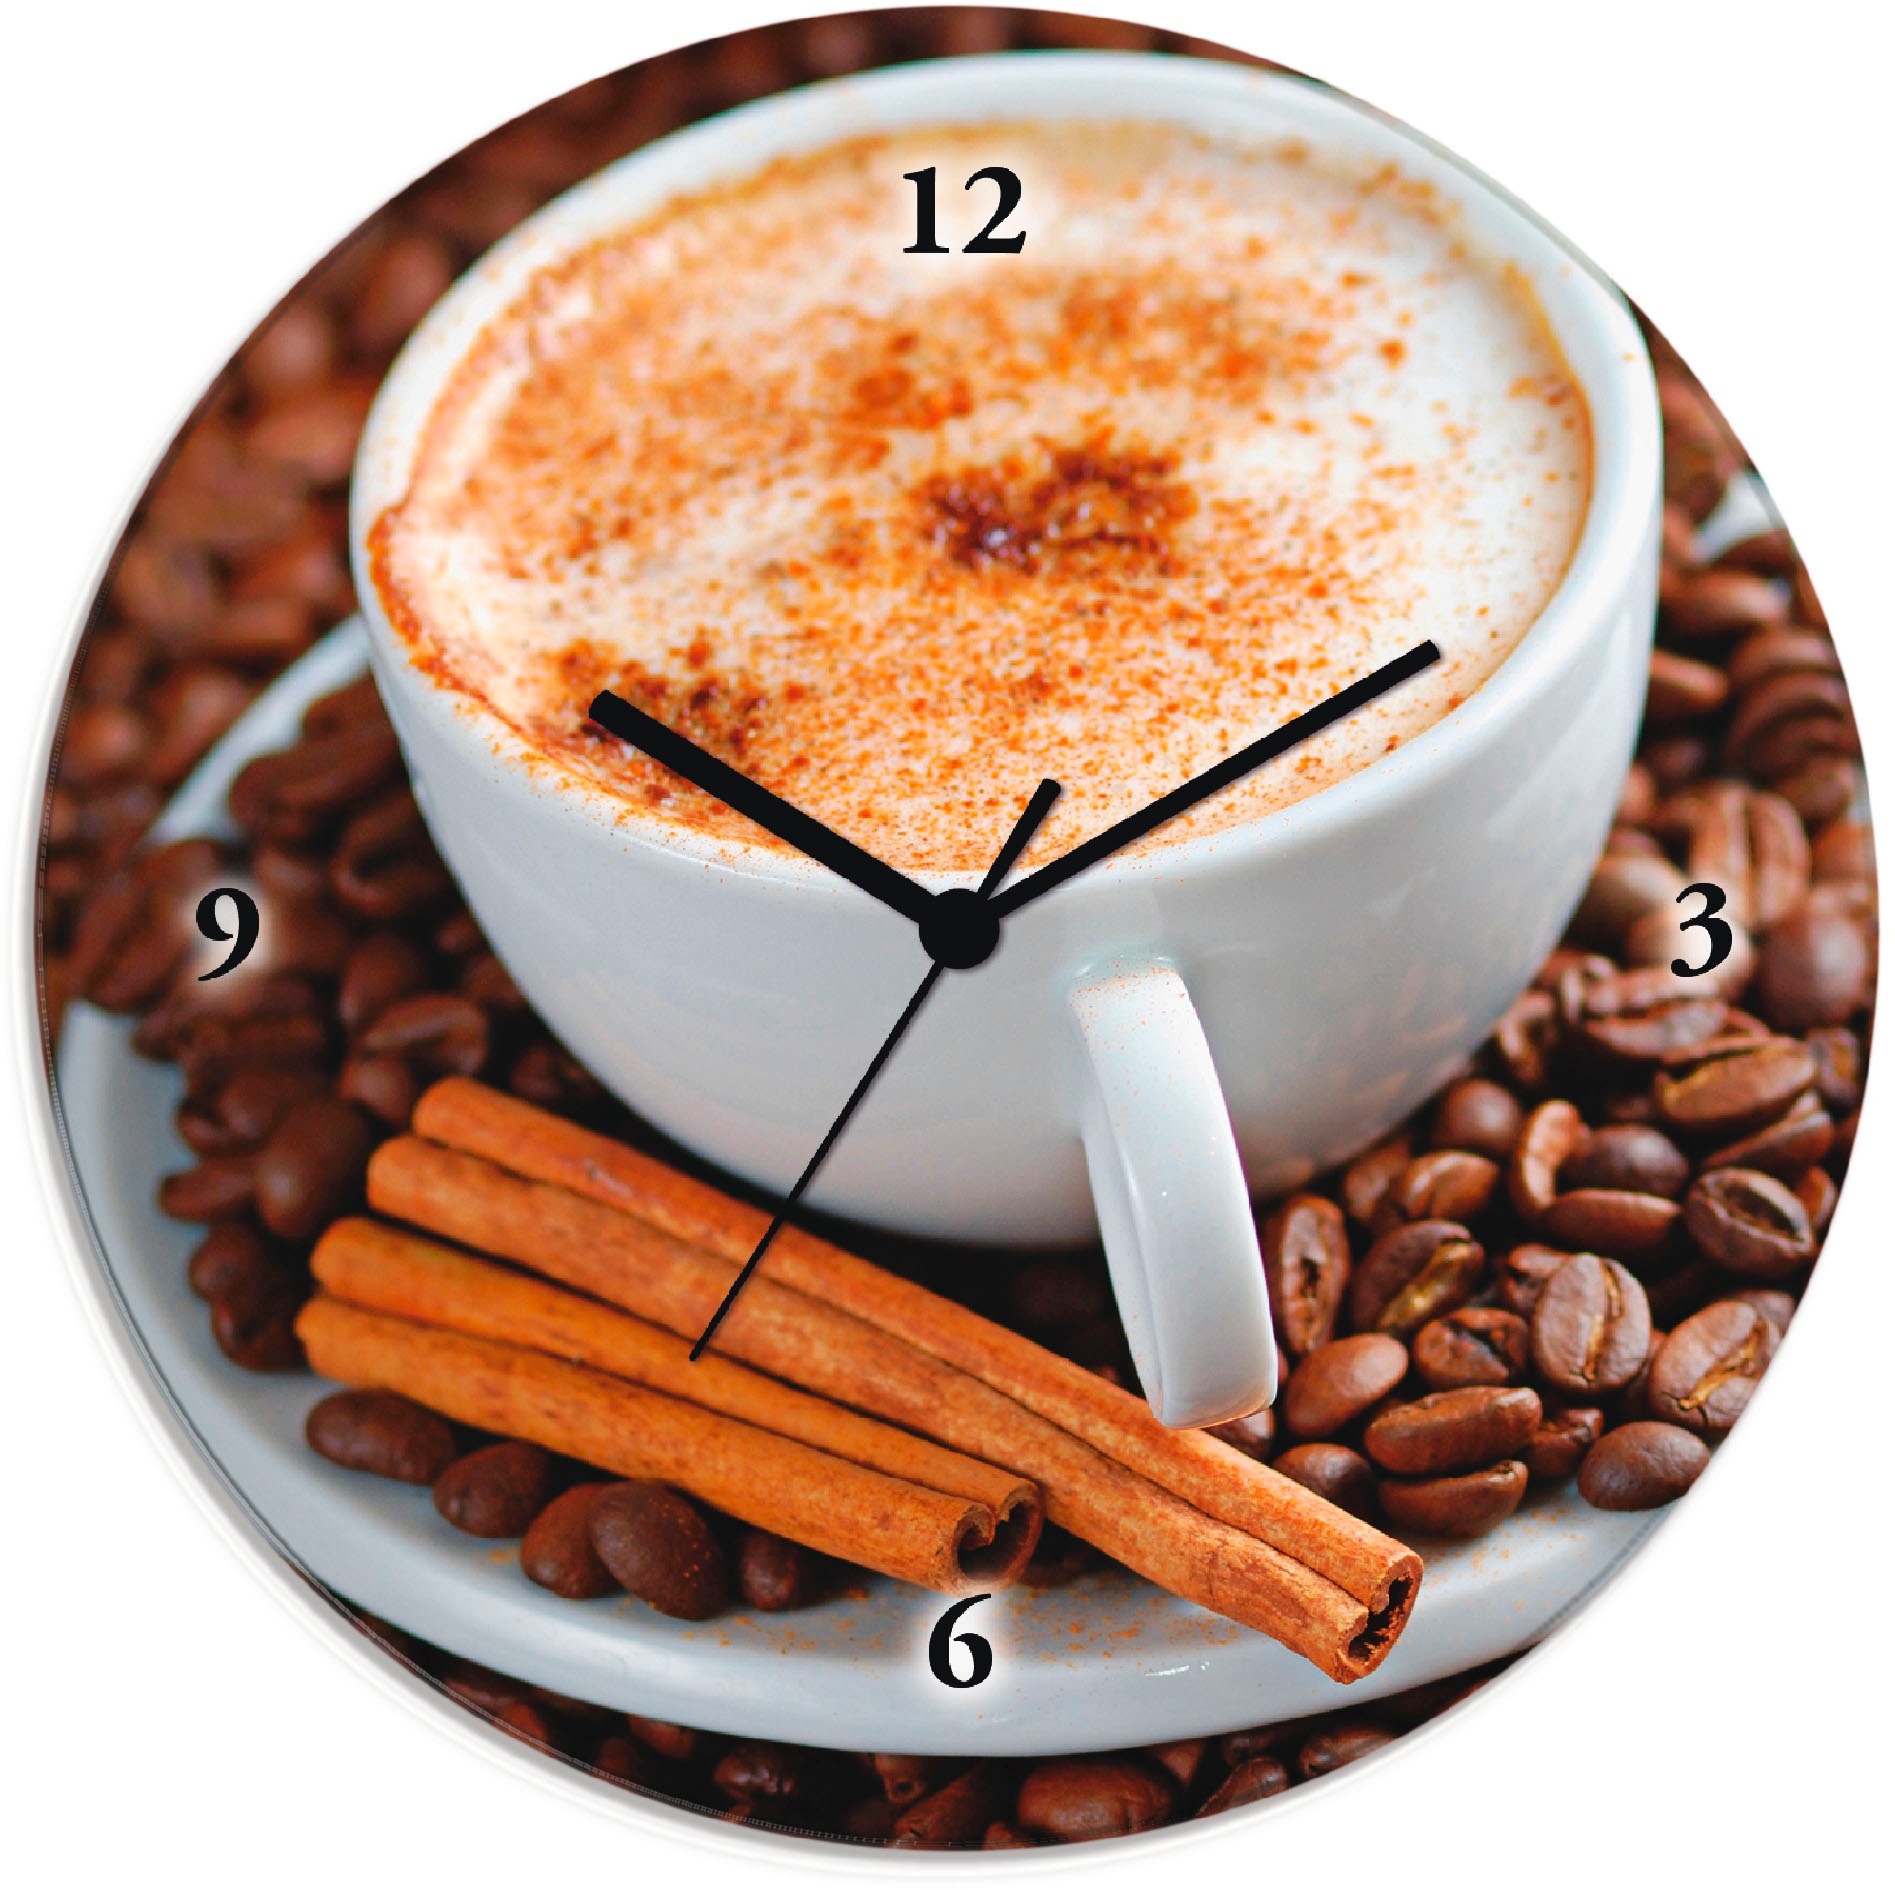 Artland Wanduhr »Cappuccino - Kaffee«, wahlweise mit Quarz- oder Funkuhrwerk, lautlos ohne Tickgeräusche